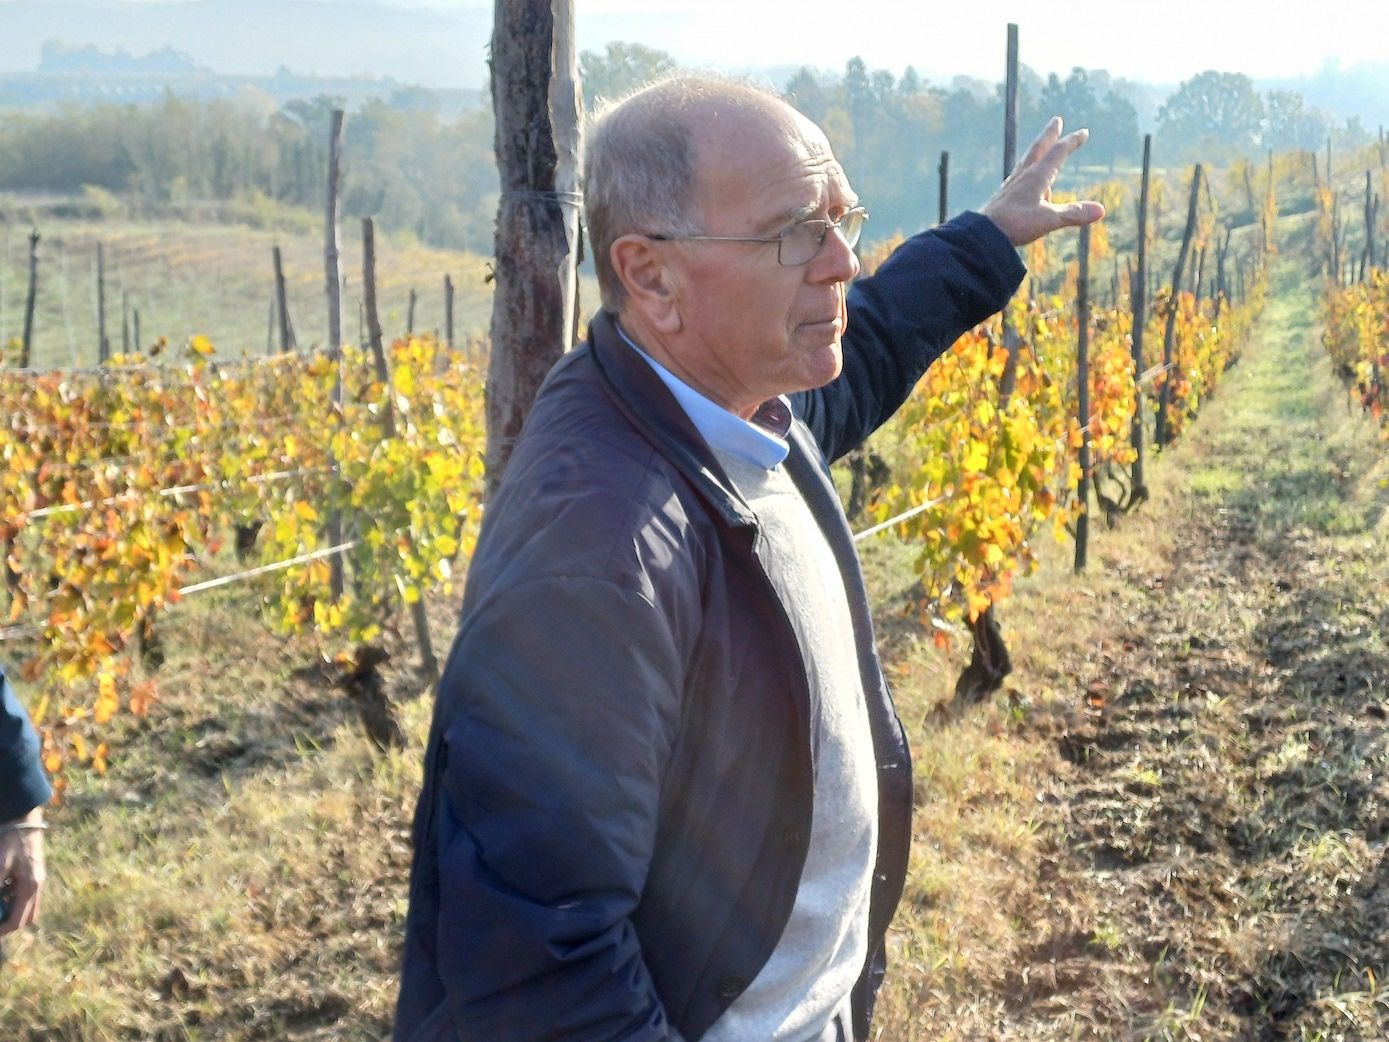 Old Vine Conference focuses on Barbera and Vinchio Vaglio wines